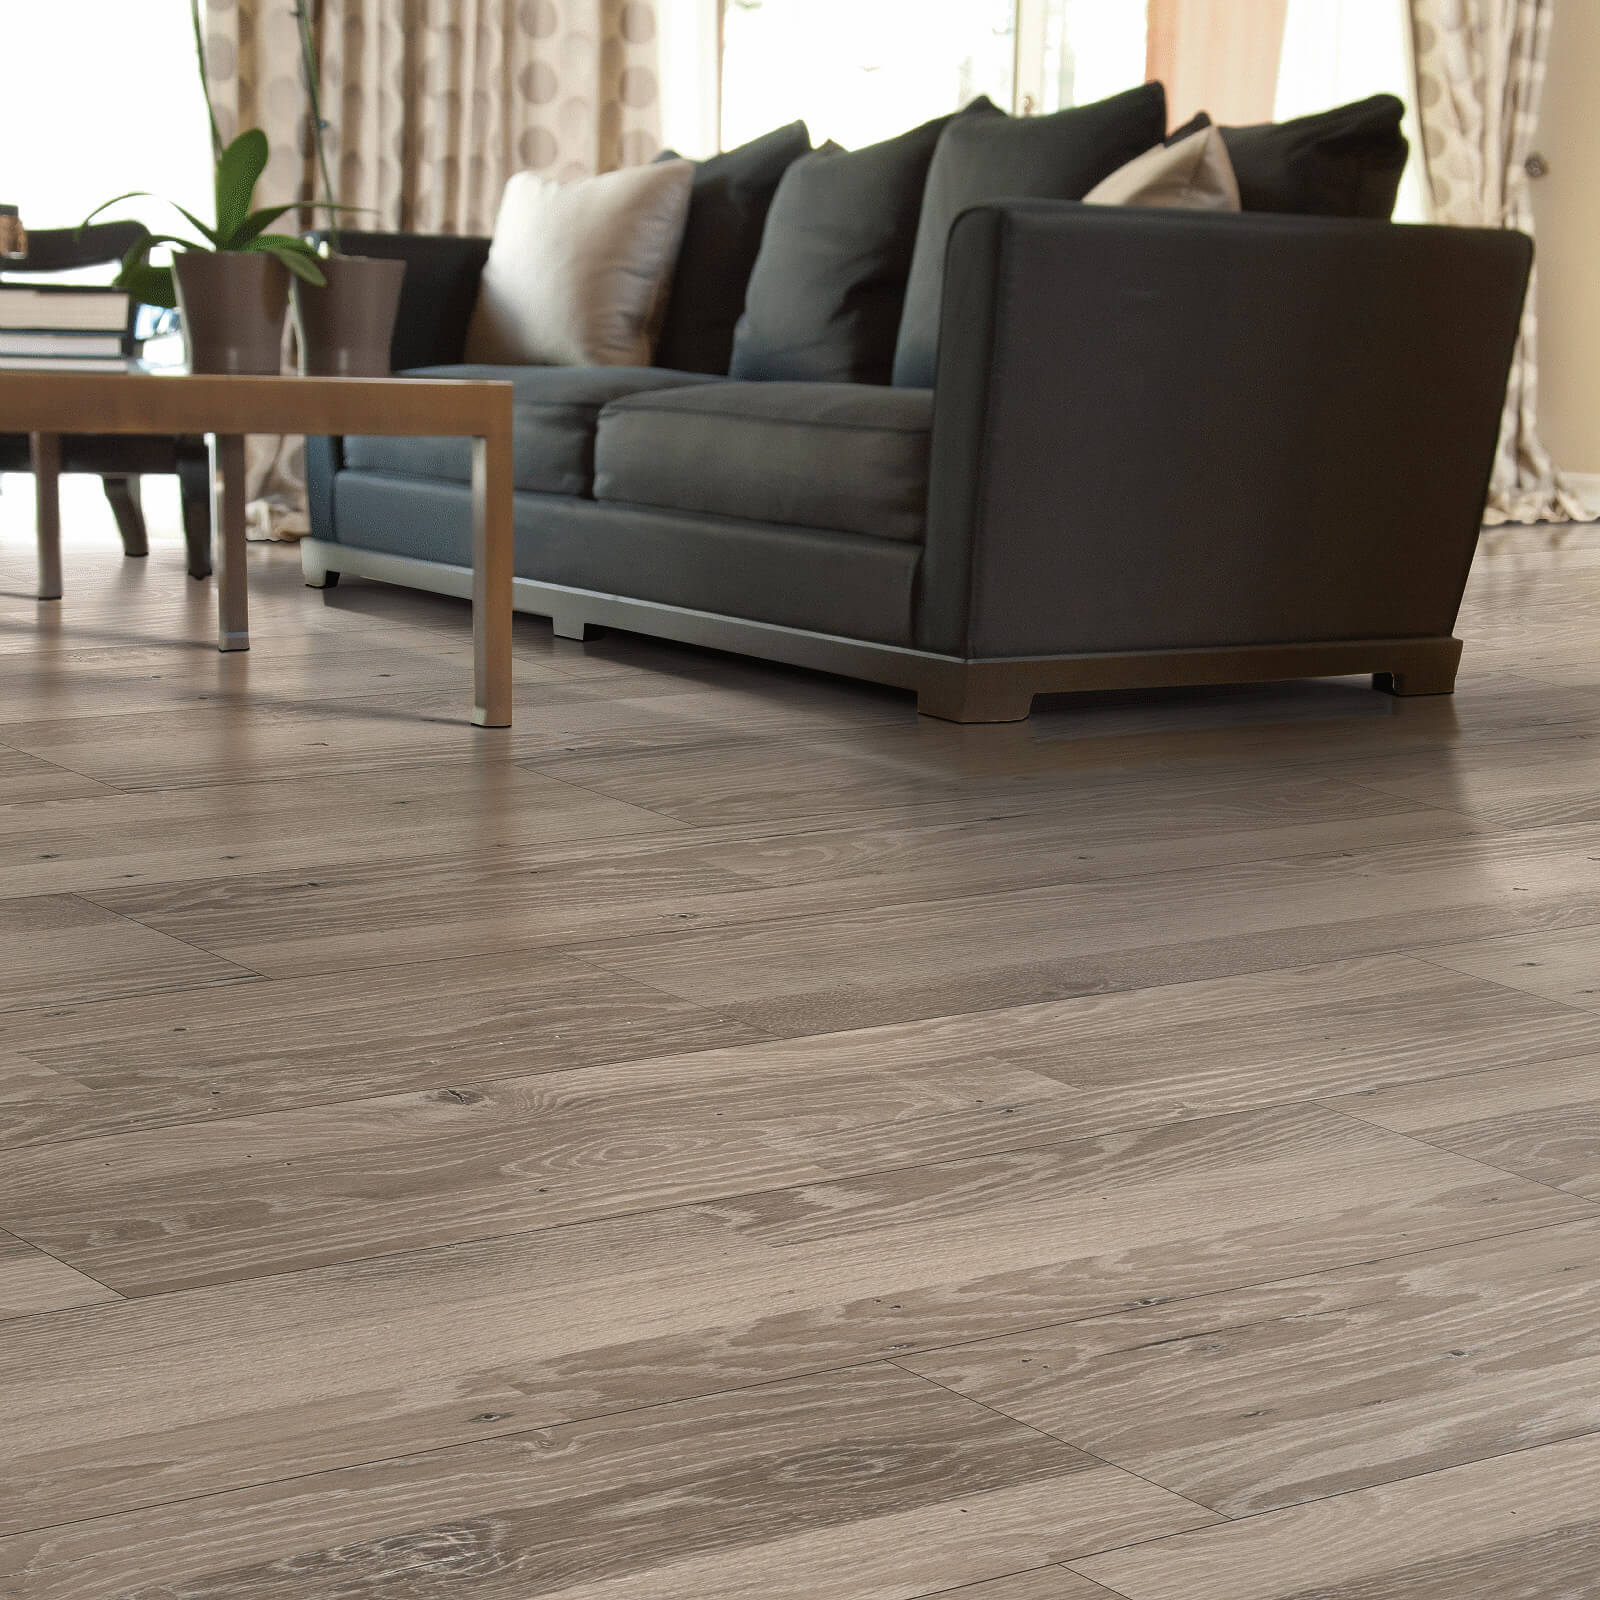 Laminate flooring in living room | Sterling Carpet and Flooring